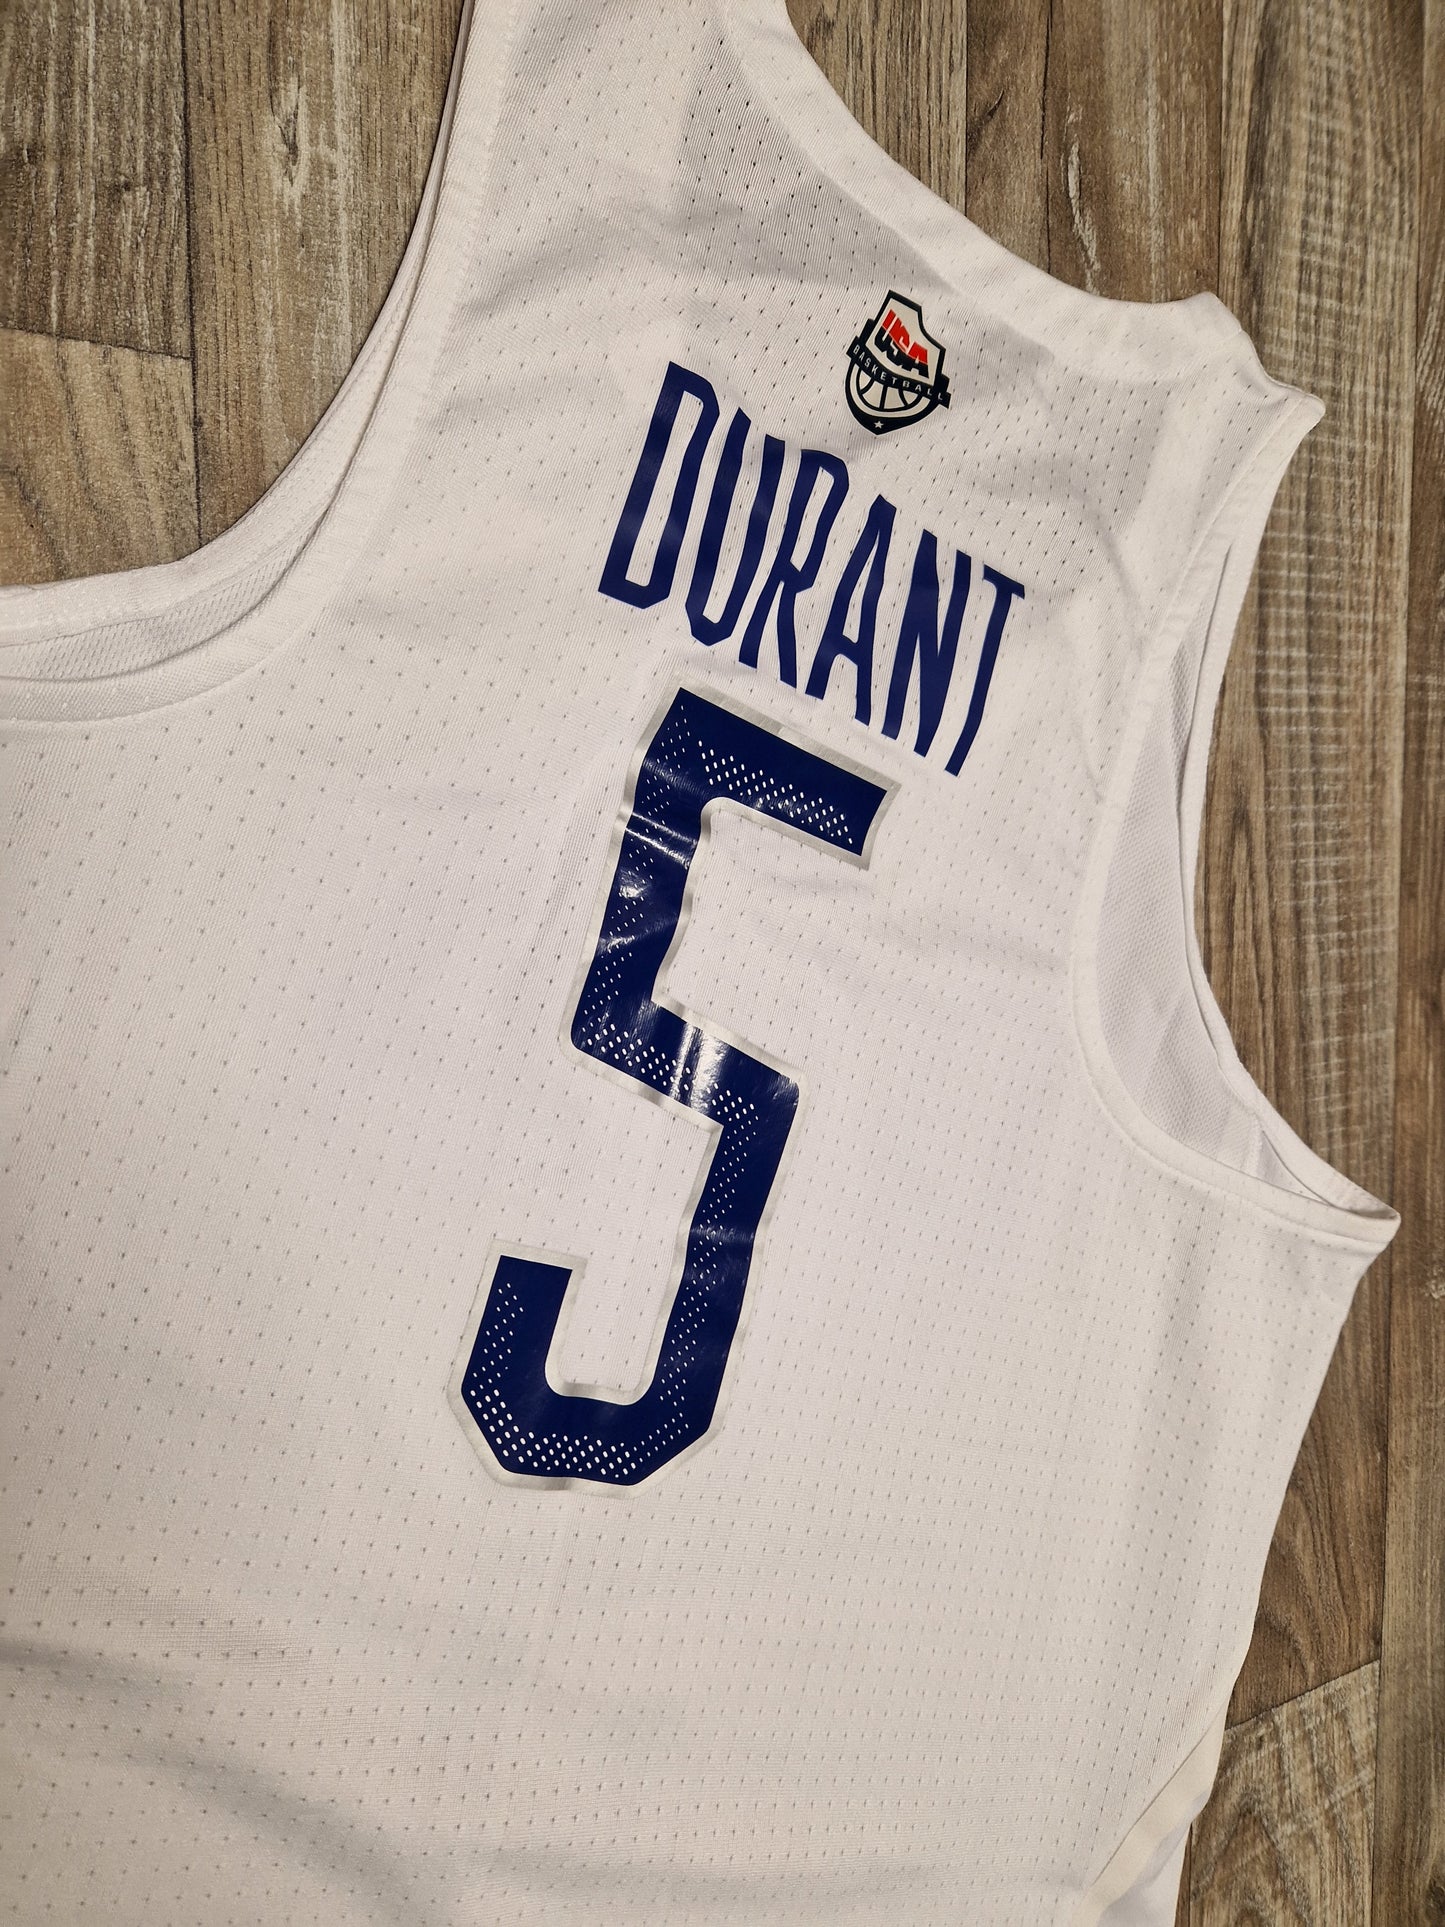 Kevin Durant Team USA Jersey Size Medium